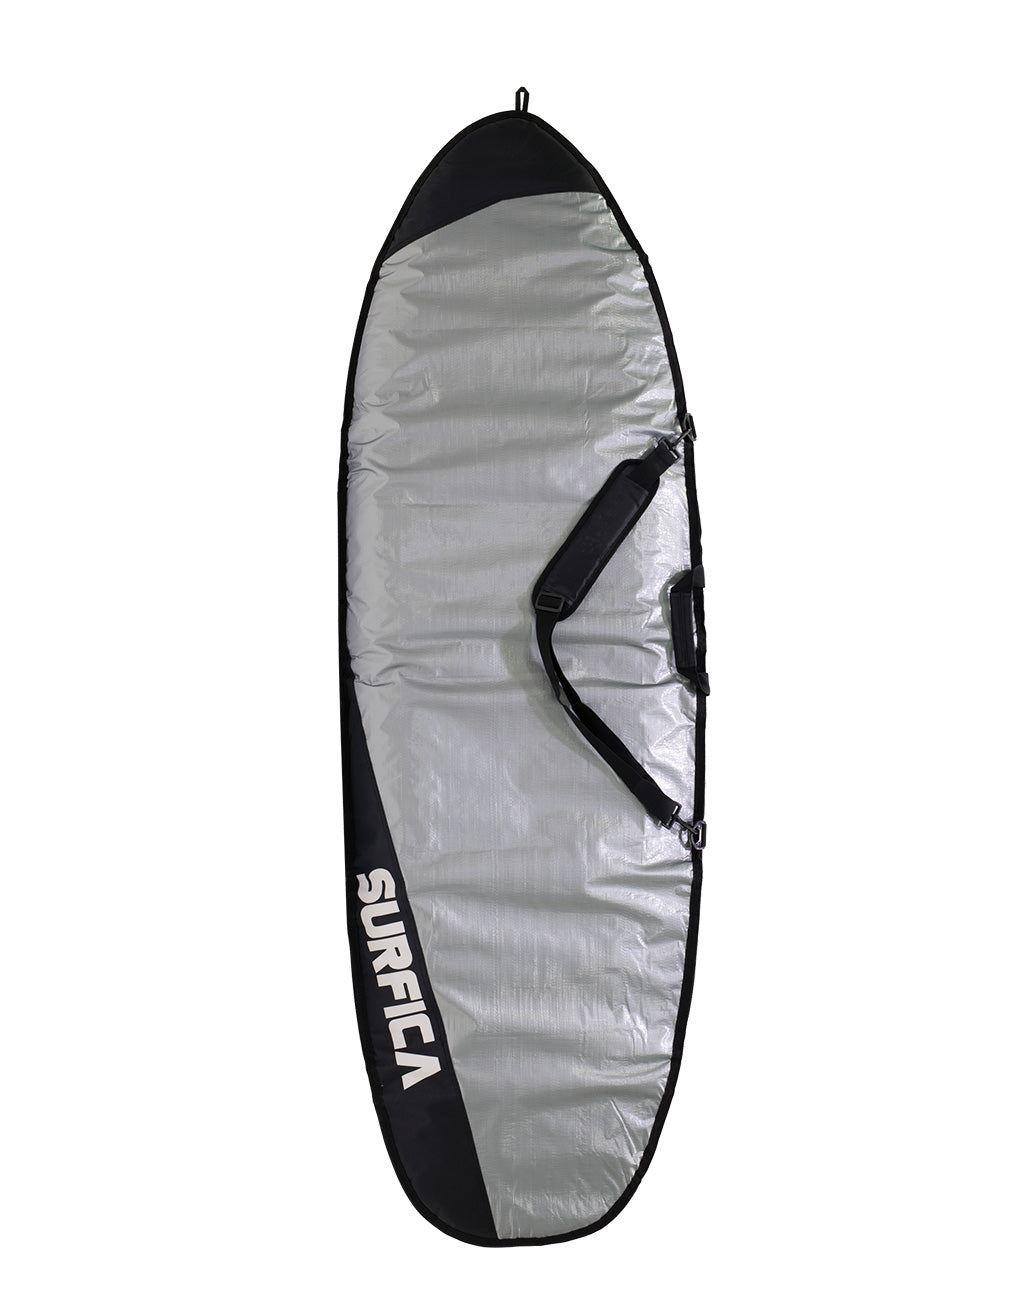 Roam Universal Coffin Surfboard Bag for Sale | Kite Paddle Surf